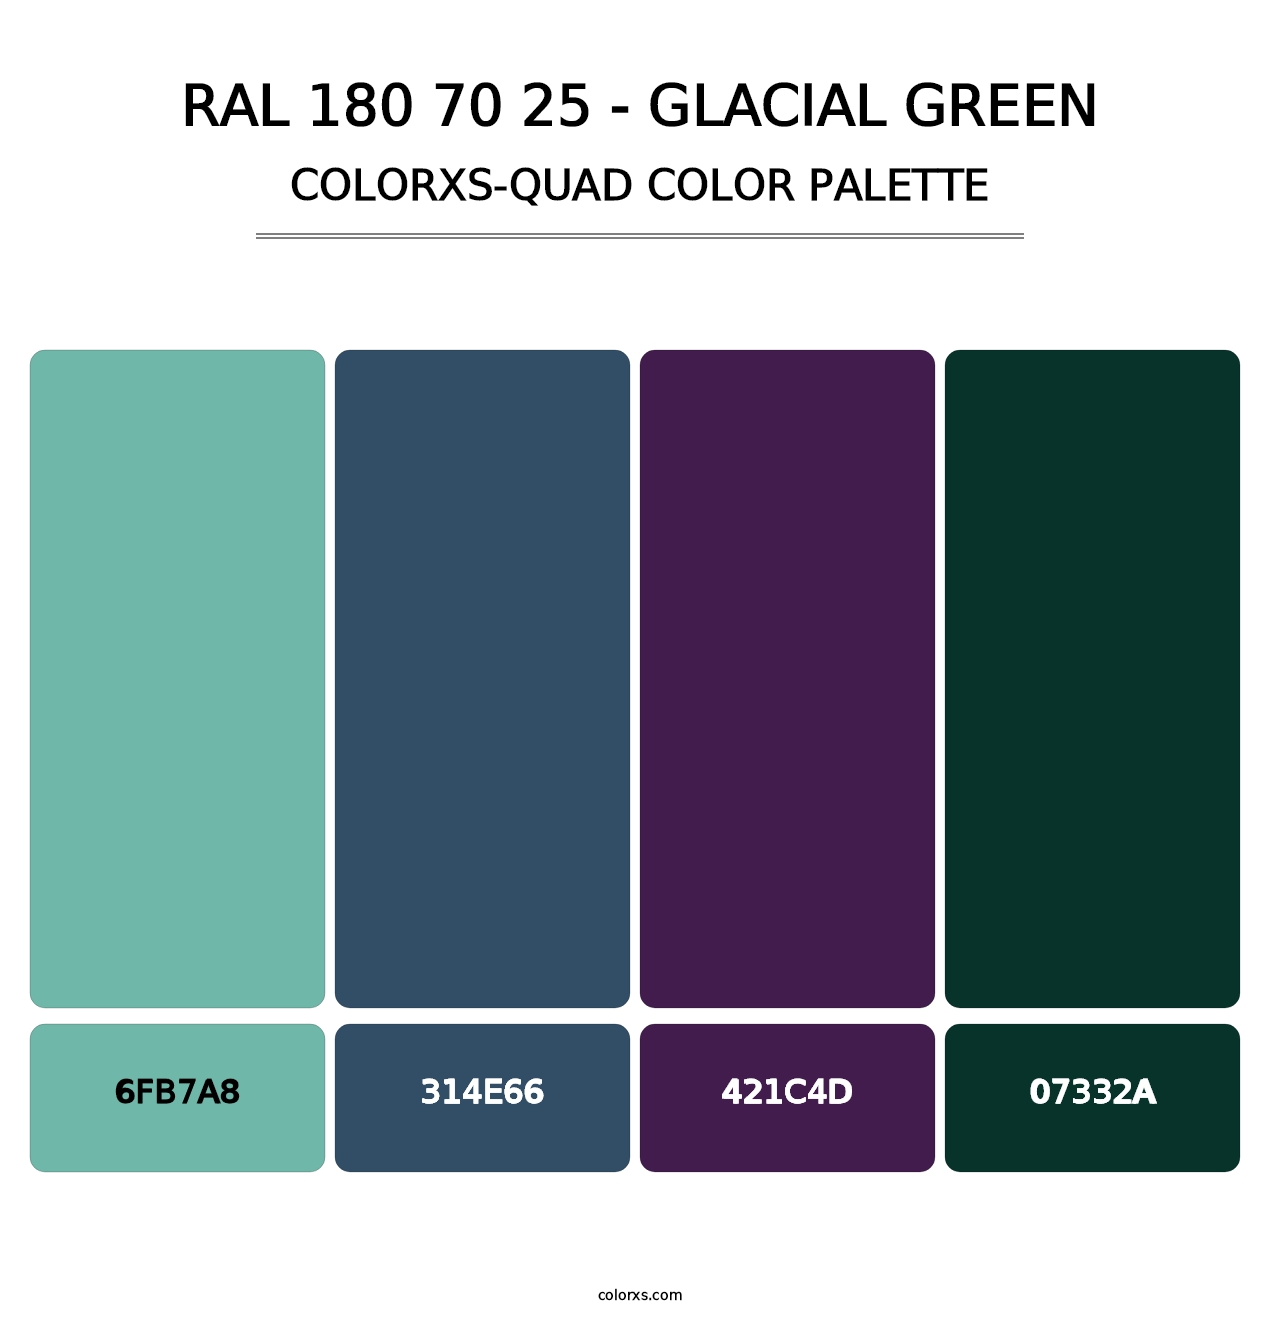 RAL 180 70 25 - Glacial Green - Colorxs Quad Palette